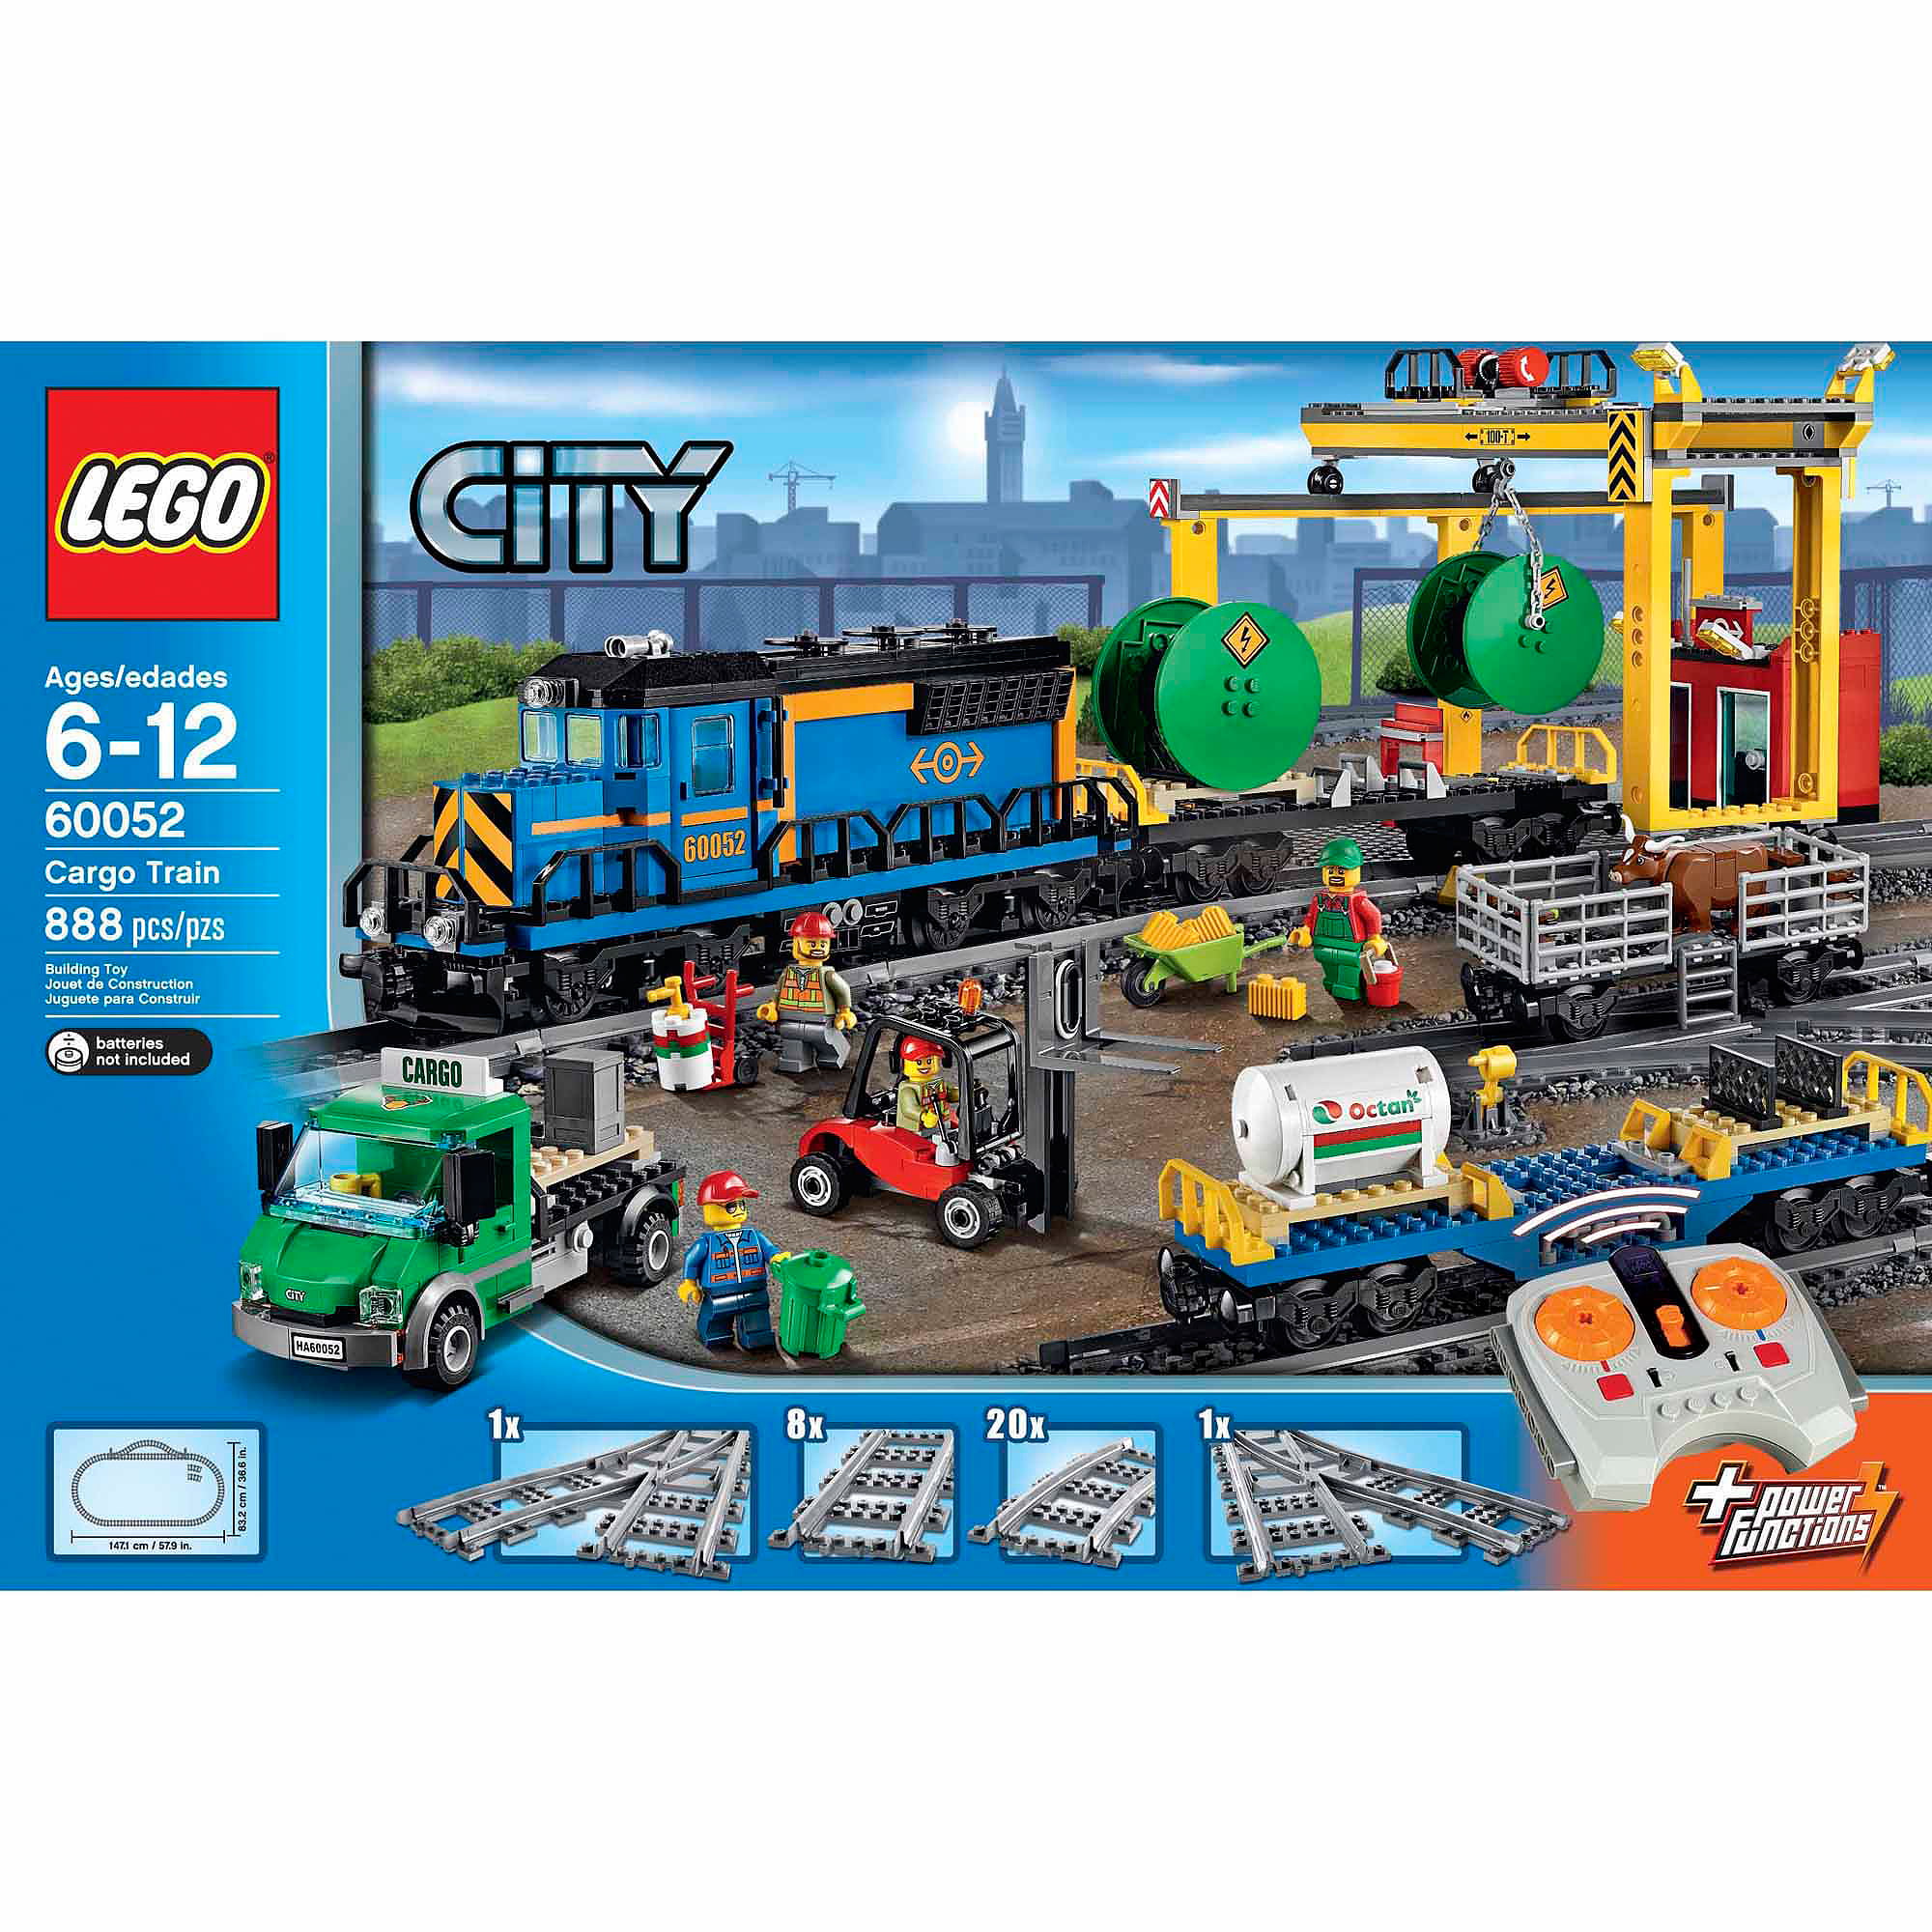 New Lego City Trains Cargo Train 60052 Building Toy Free Shipping Ebay